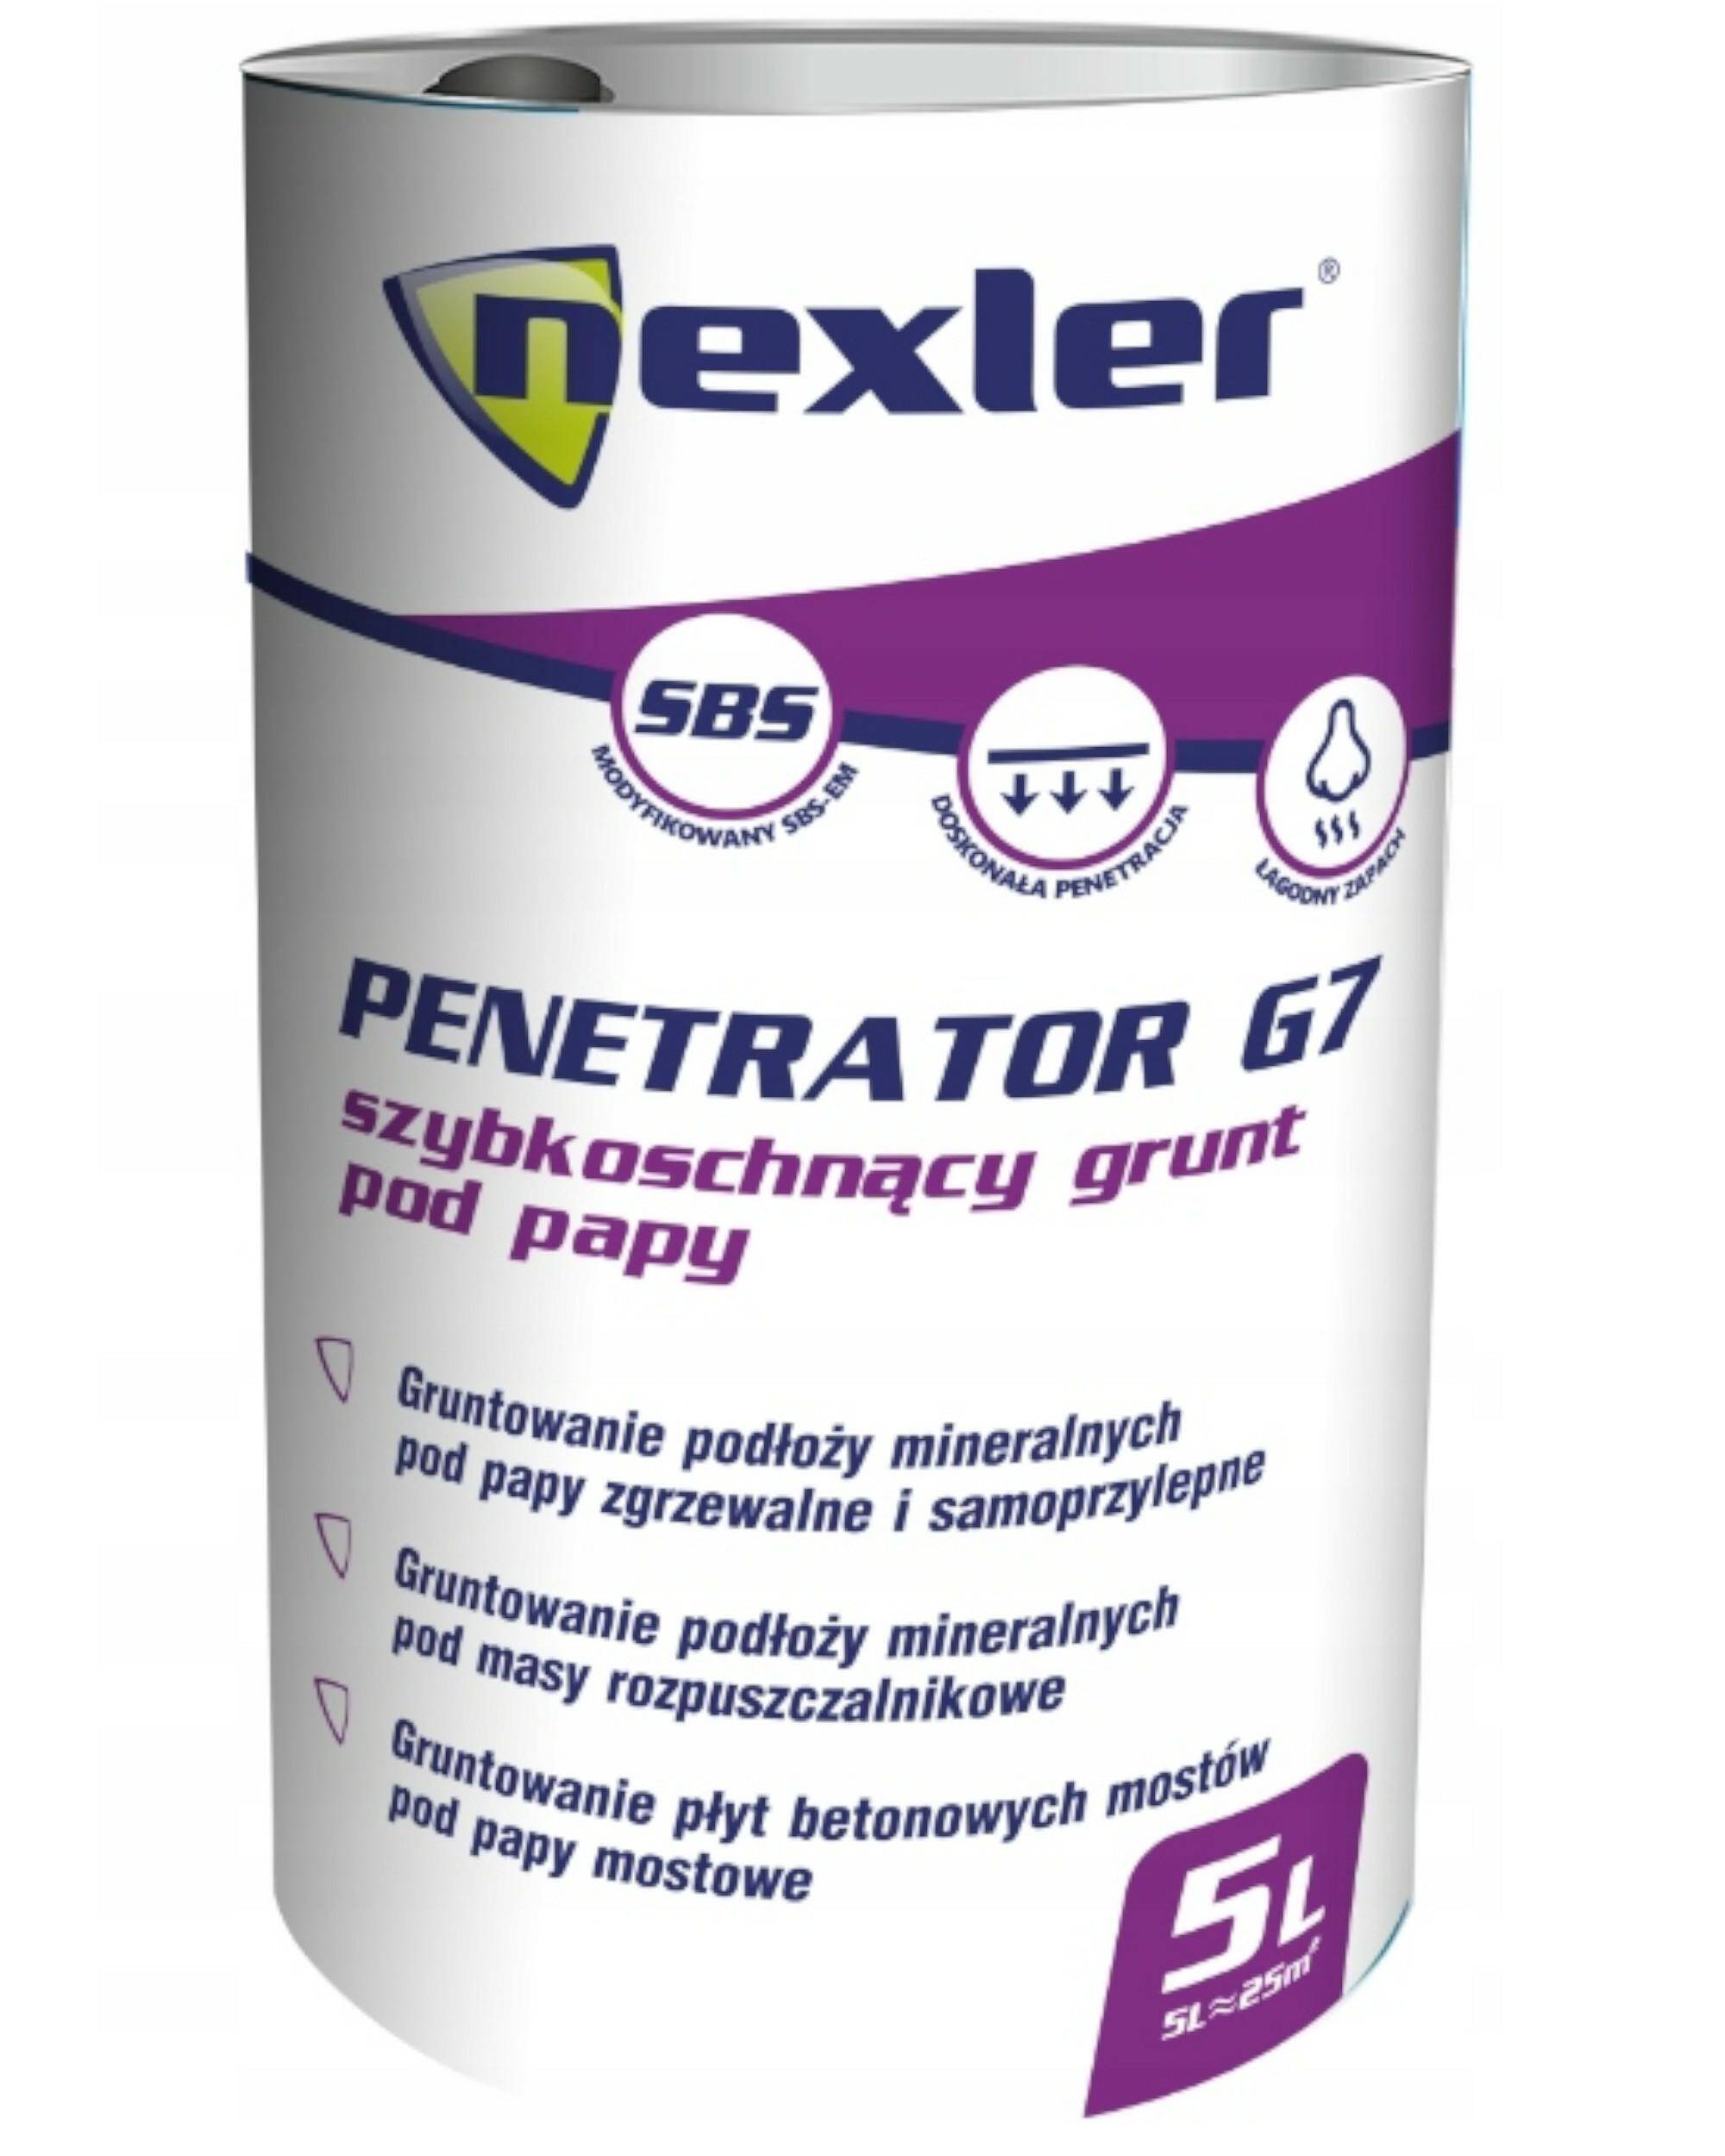 NEXLER Penetrator G7 5L szybkoschnący